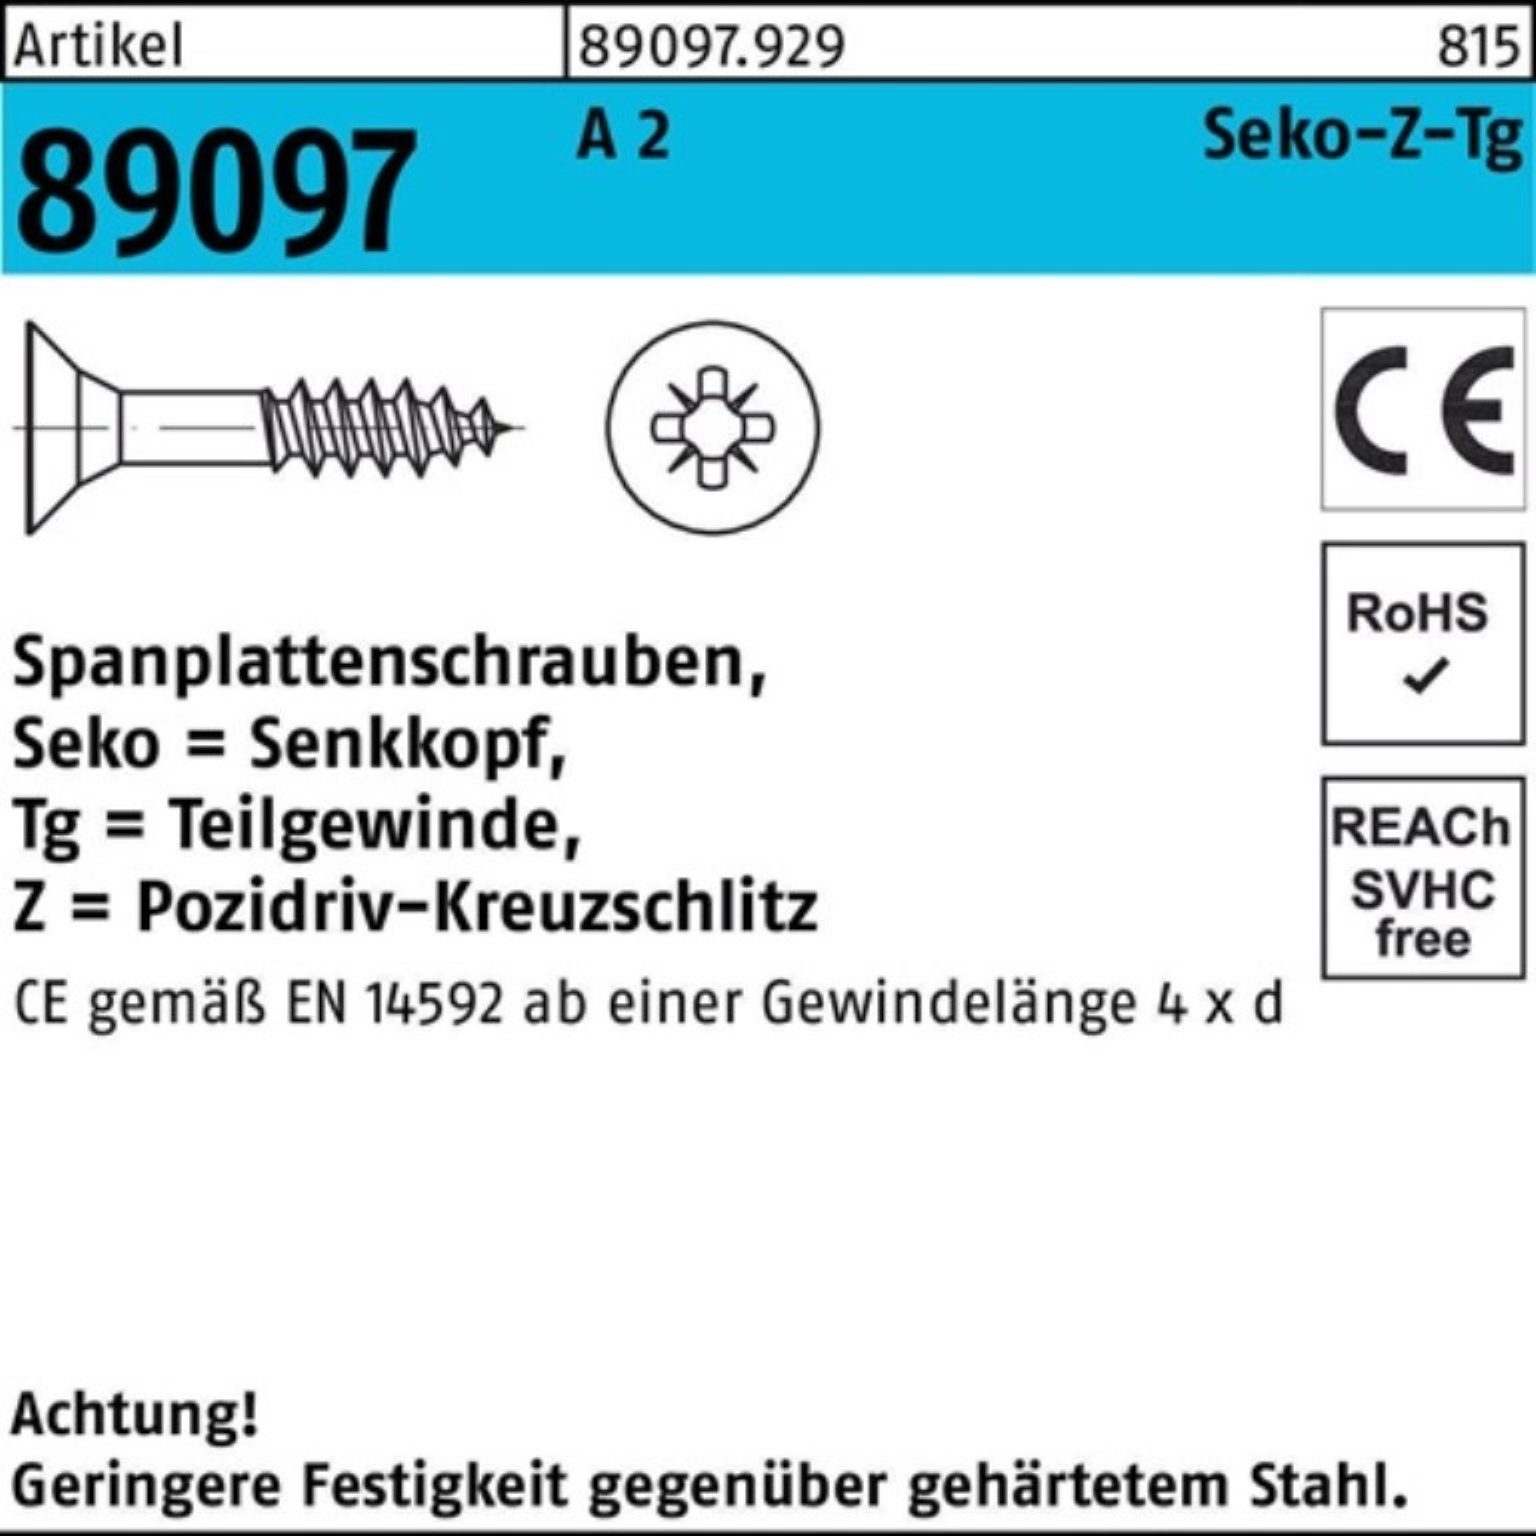 Reyher Pack TG 70-Z Stü Spanplattenschraube 89097 500er A 5x 2 SEKO 500 PZ R Spanplattenschraube